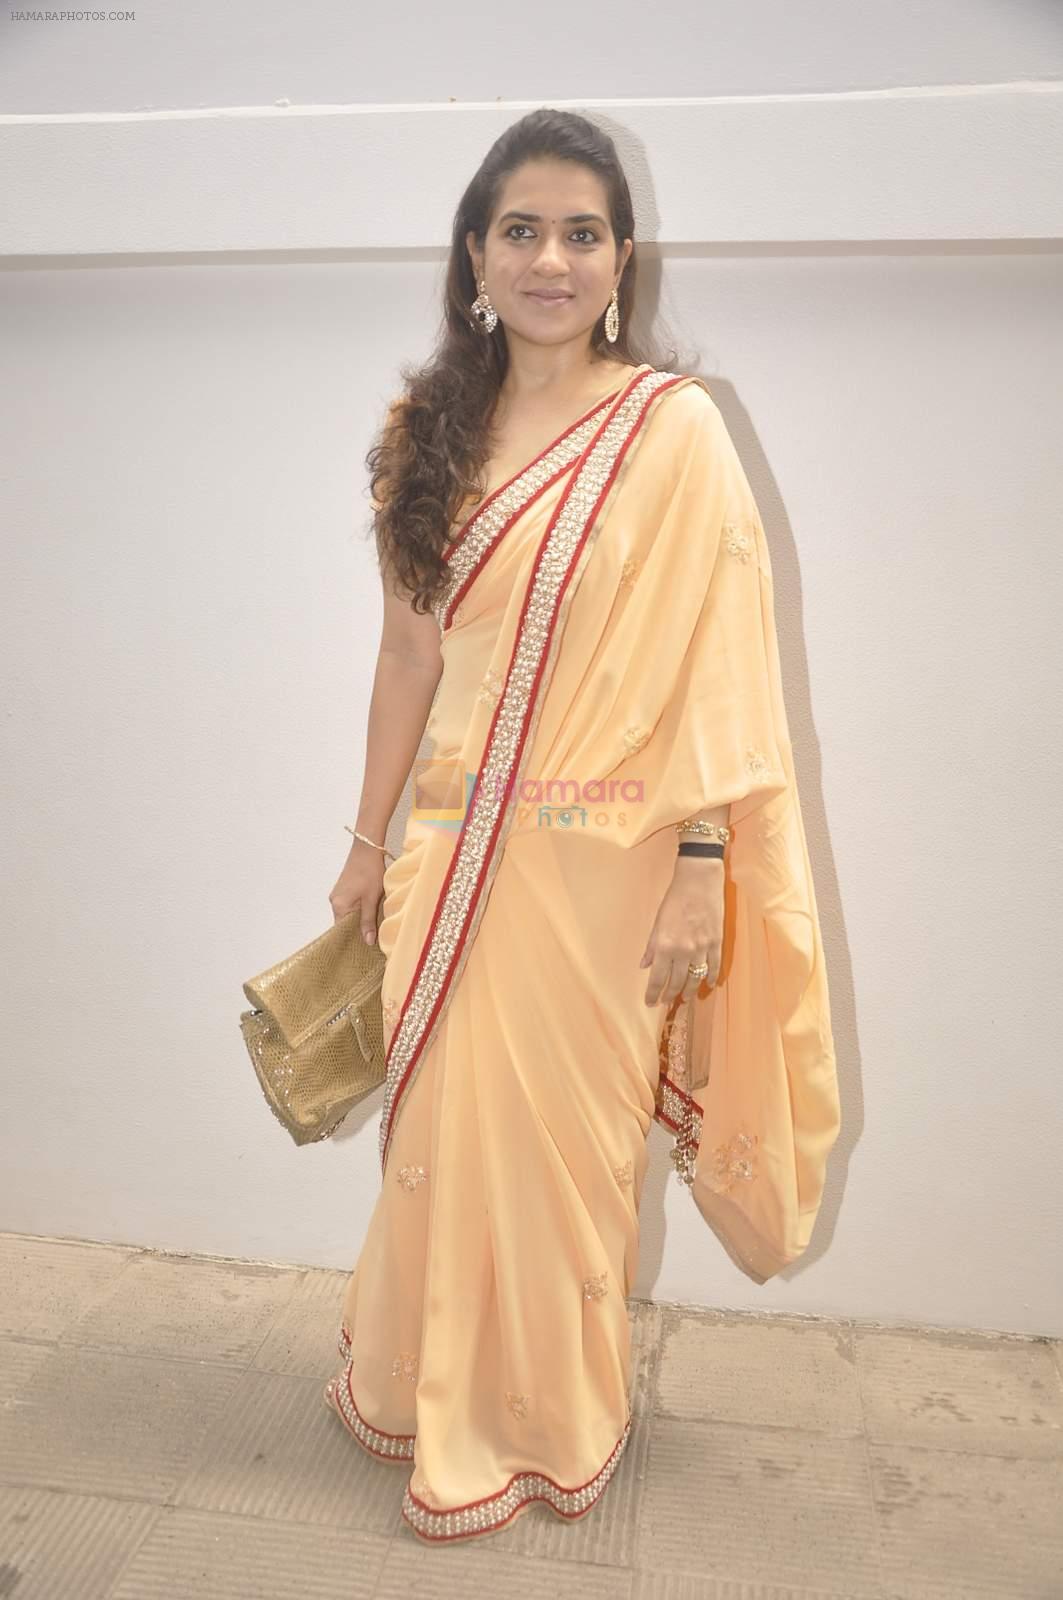 Shaina NC at Nishka and Dhruv's wedding bash in Mumbai on 31st May 2015